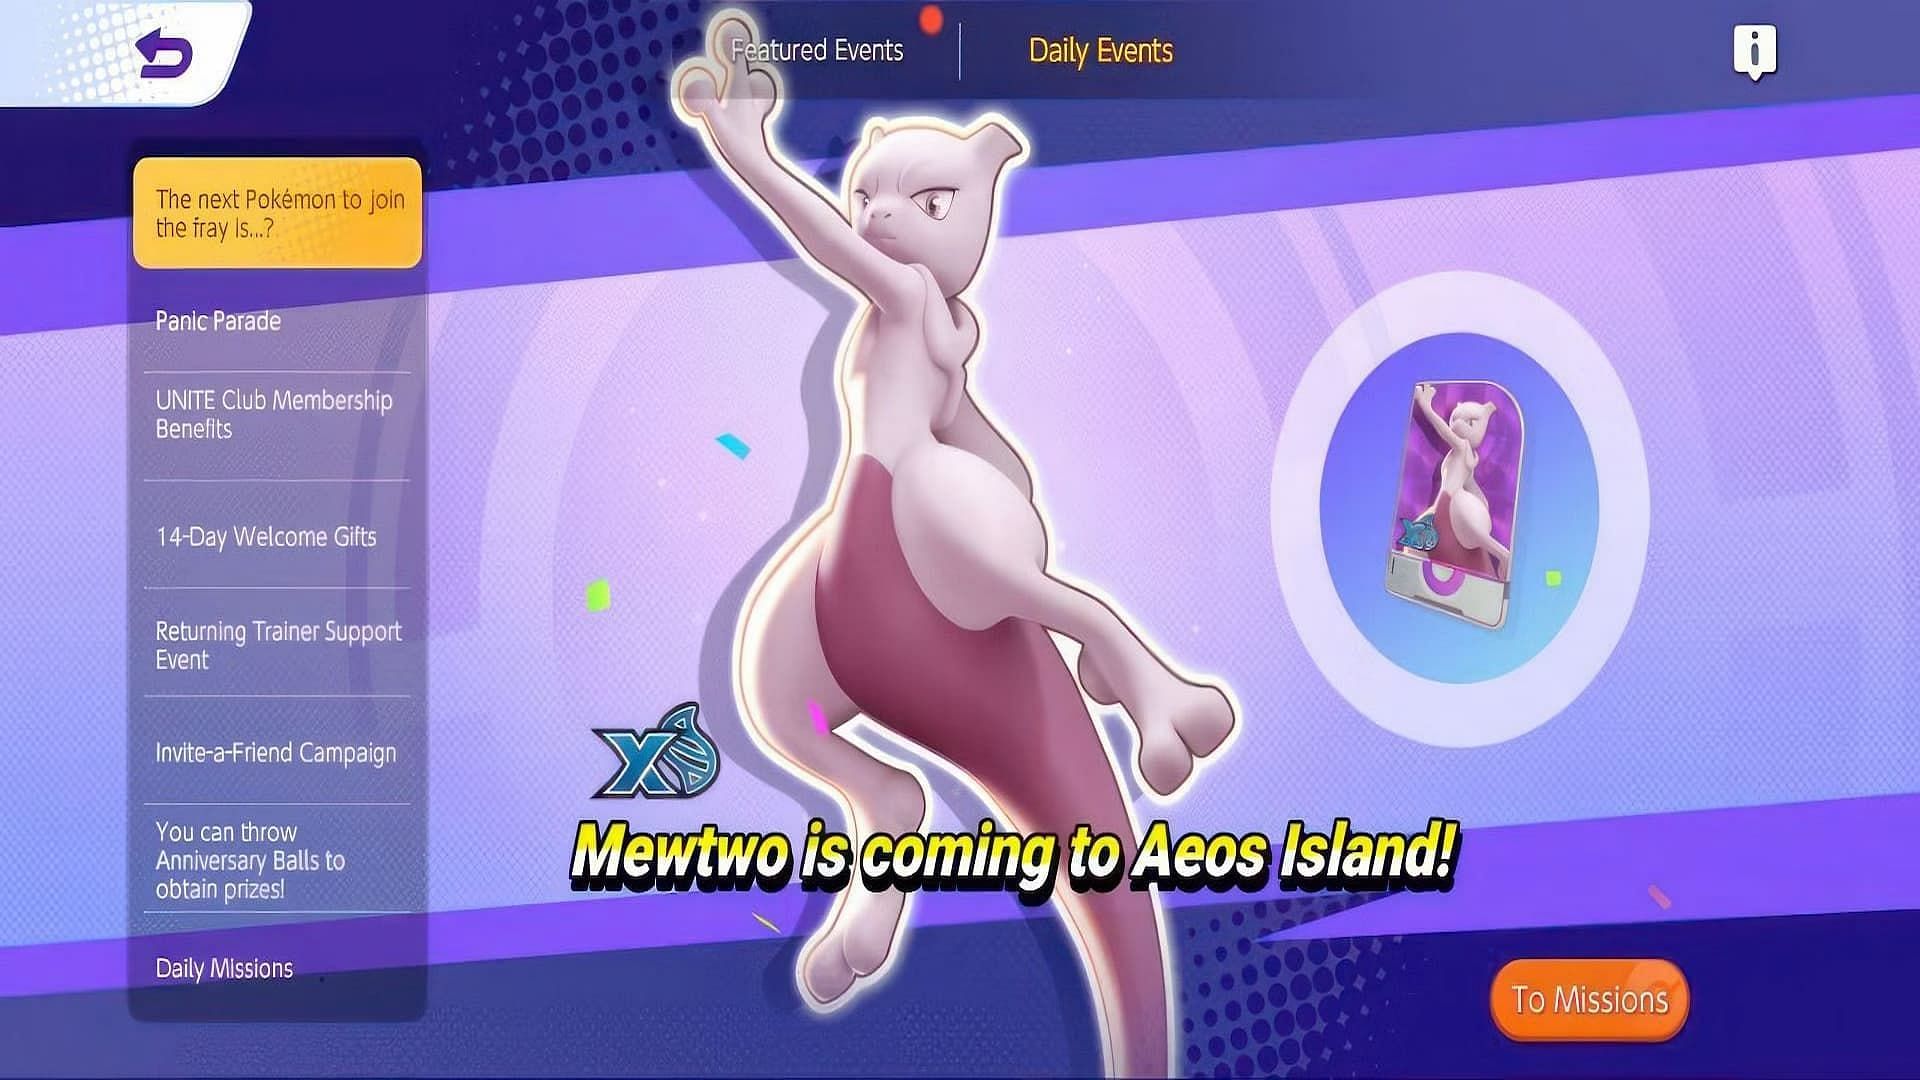 Mewtwo as seen in the Pokemon Unite event (Image via The Pokemon Company)